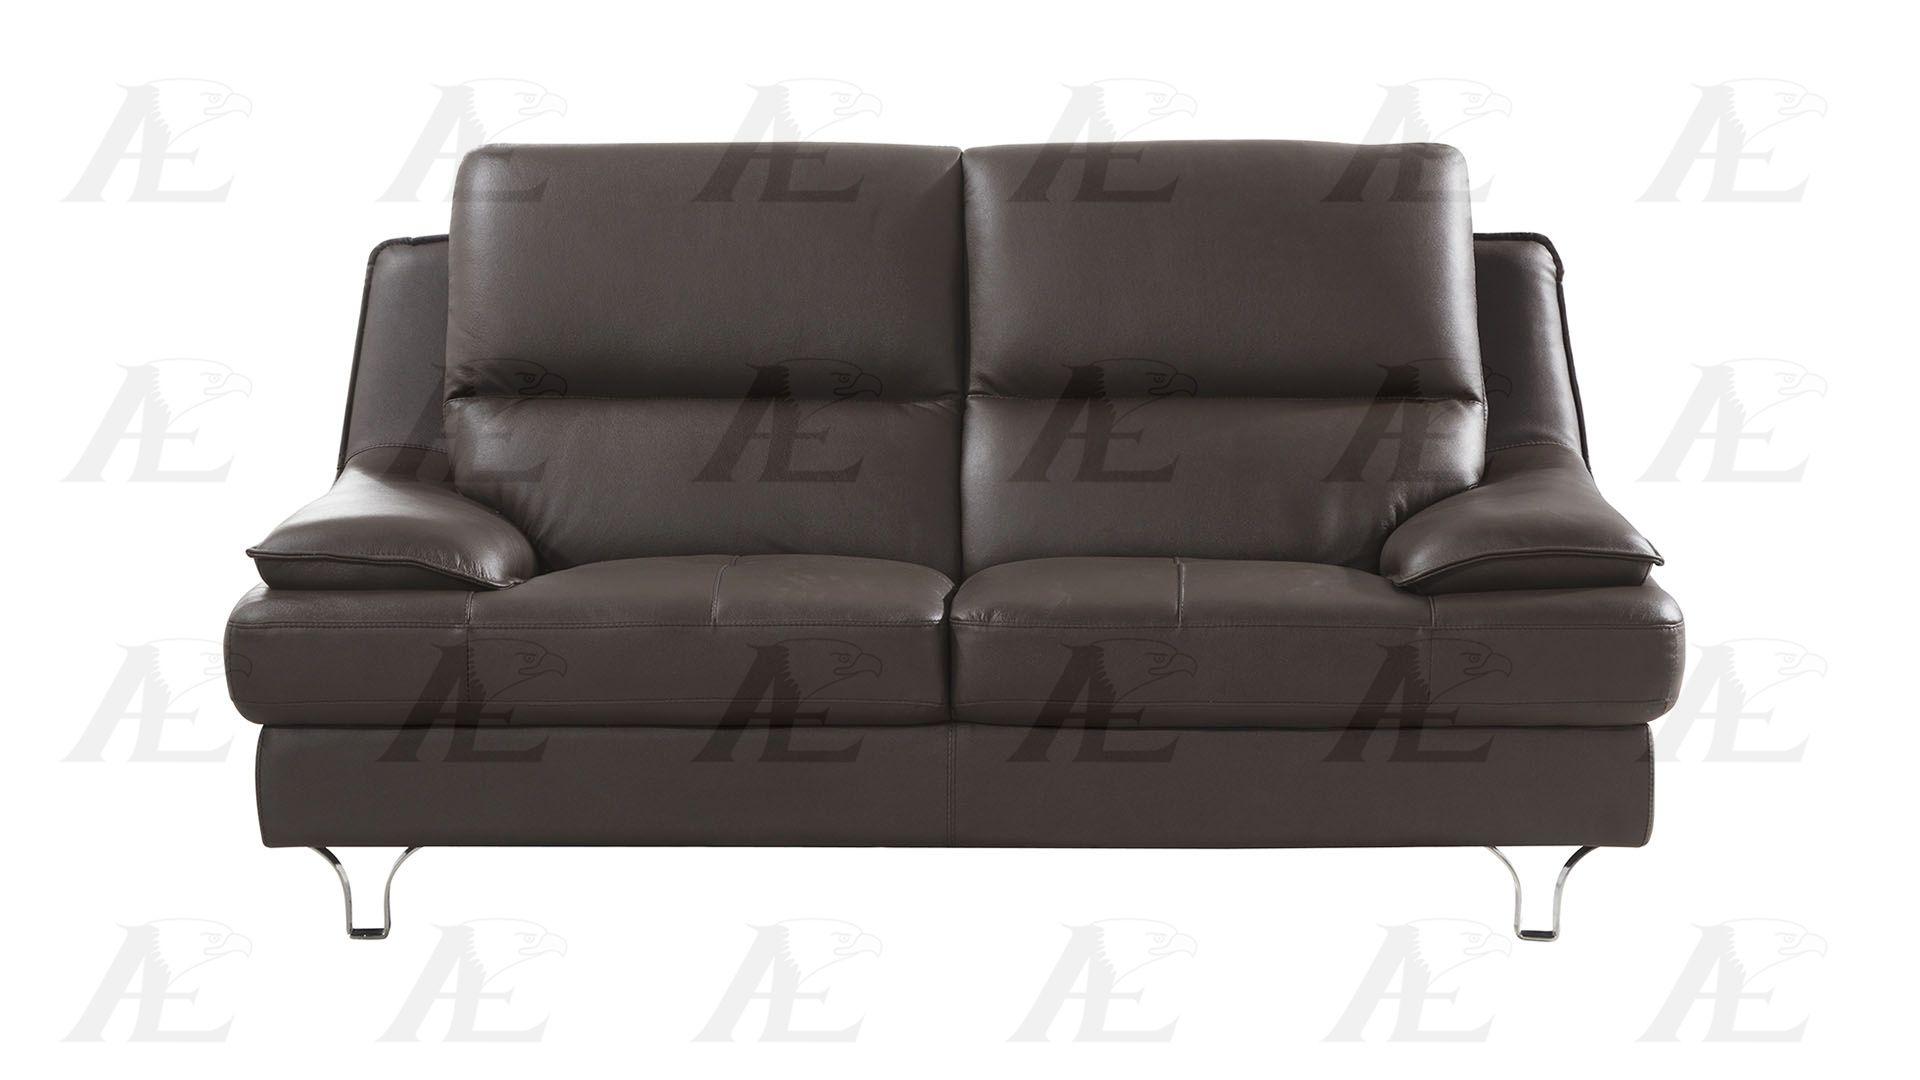 

    
EK-B109-DC Set-2 American Eagle Furniture Sofa and Loveseat Set
